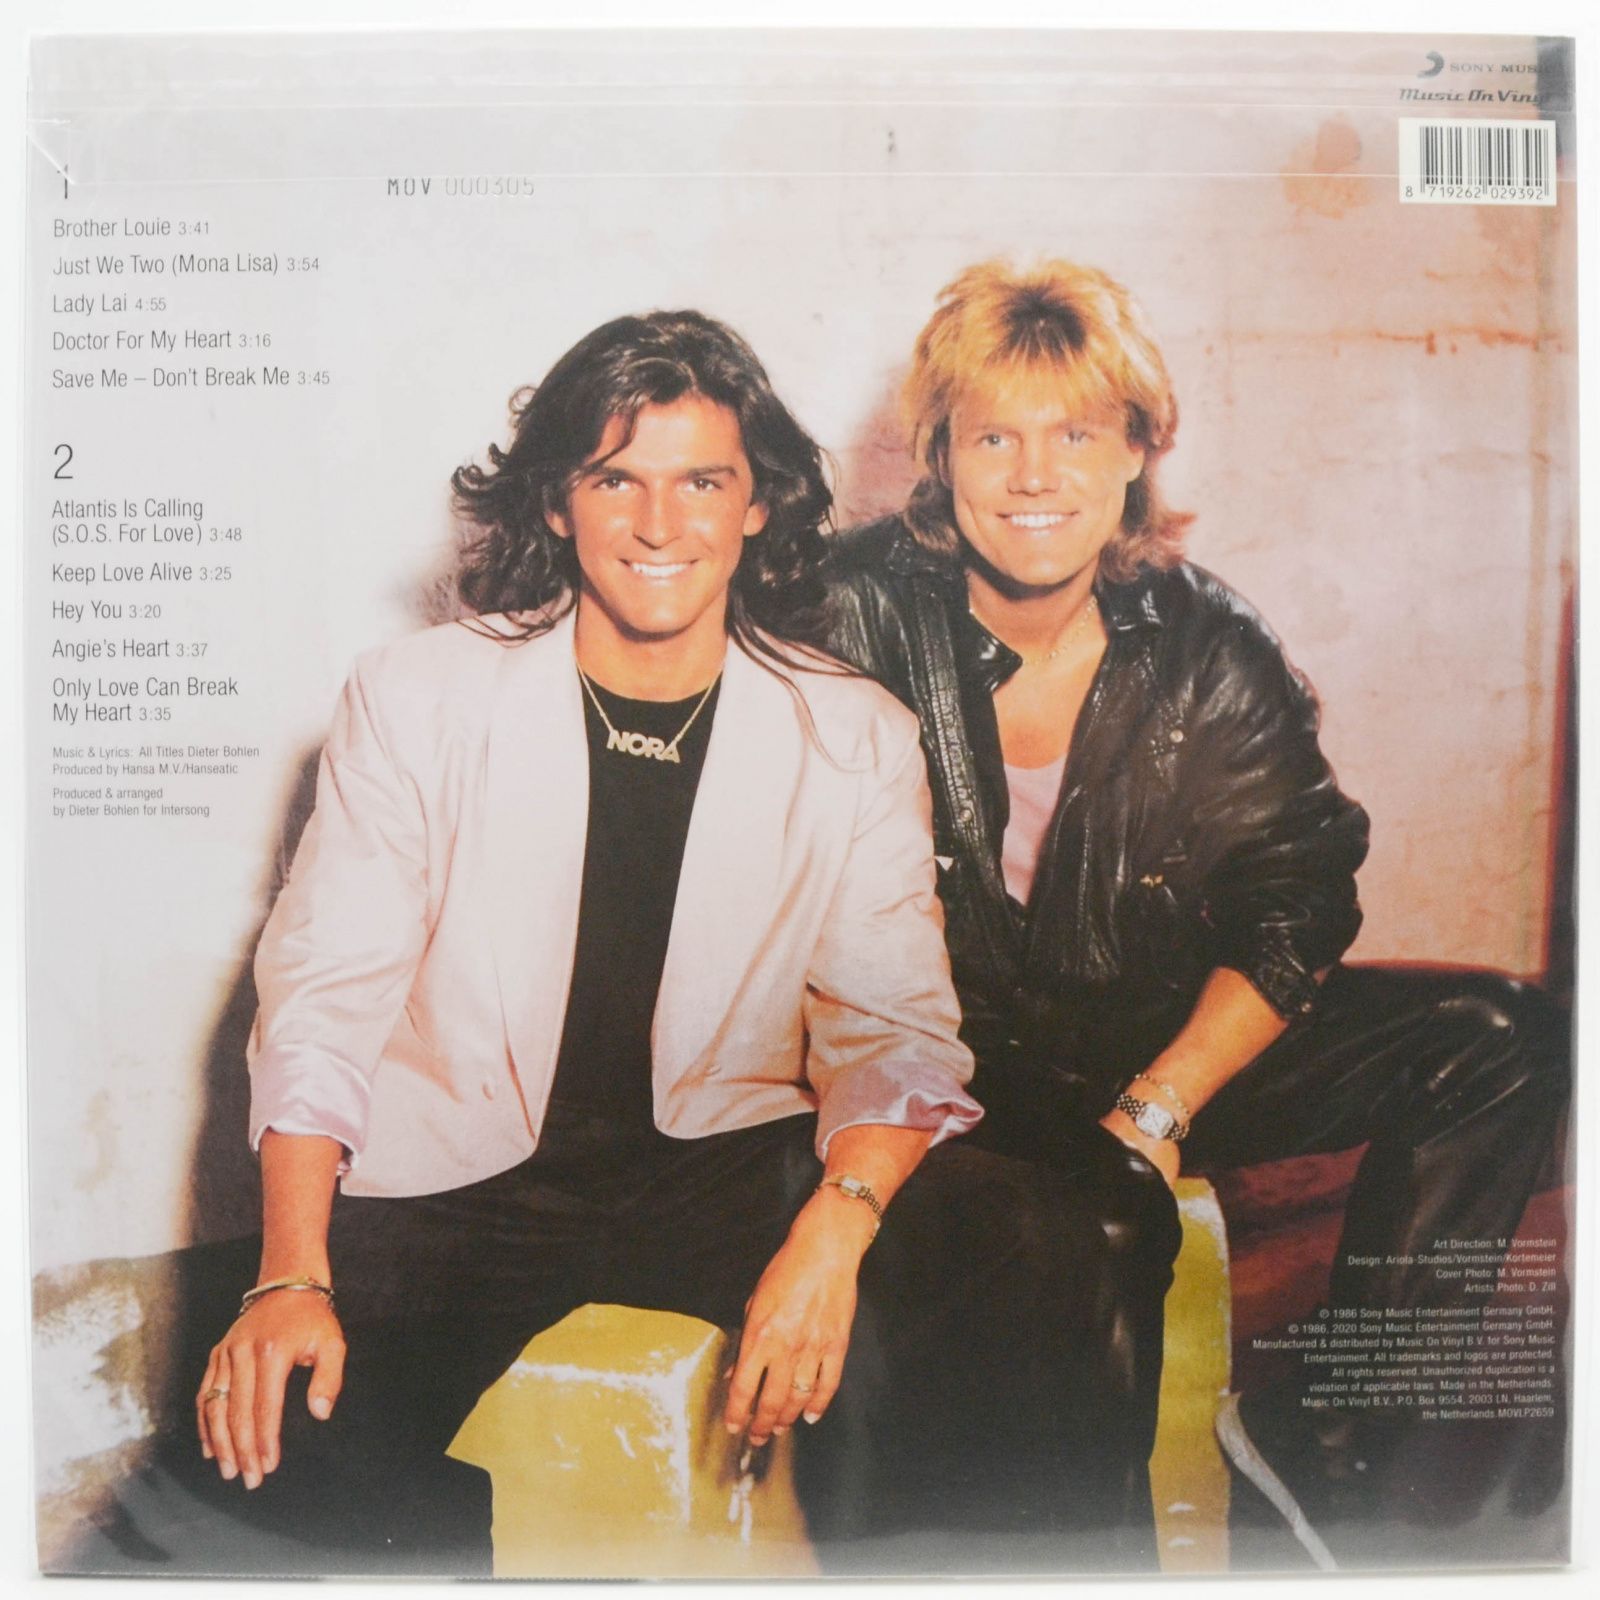 Modern Talking — Ready For Romance - The 3rd Album, 1986